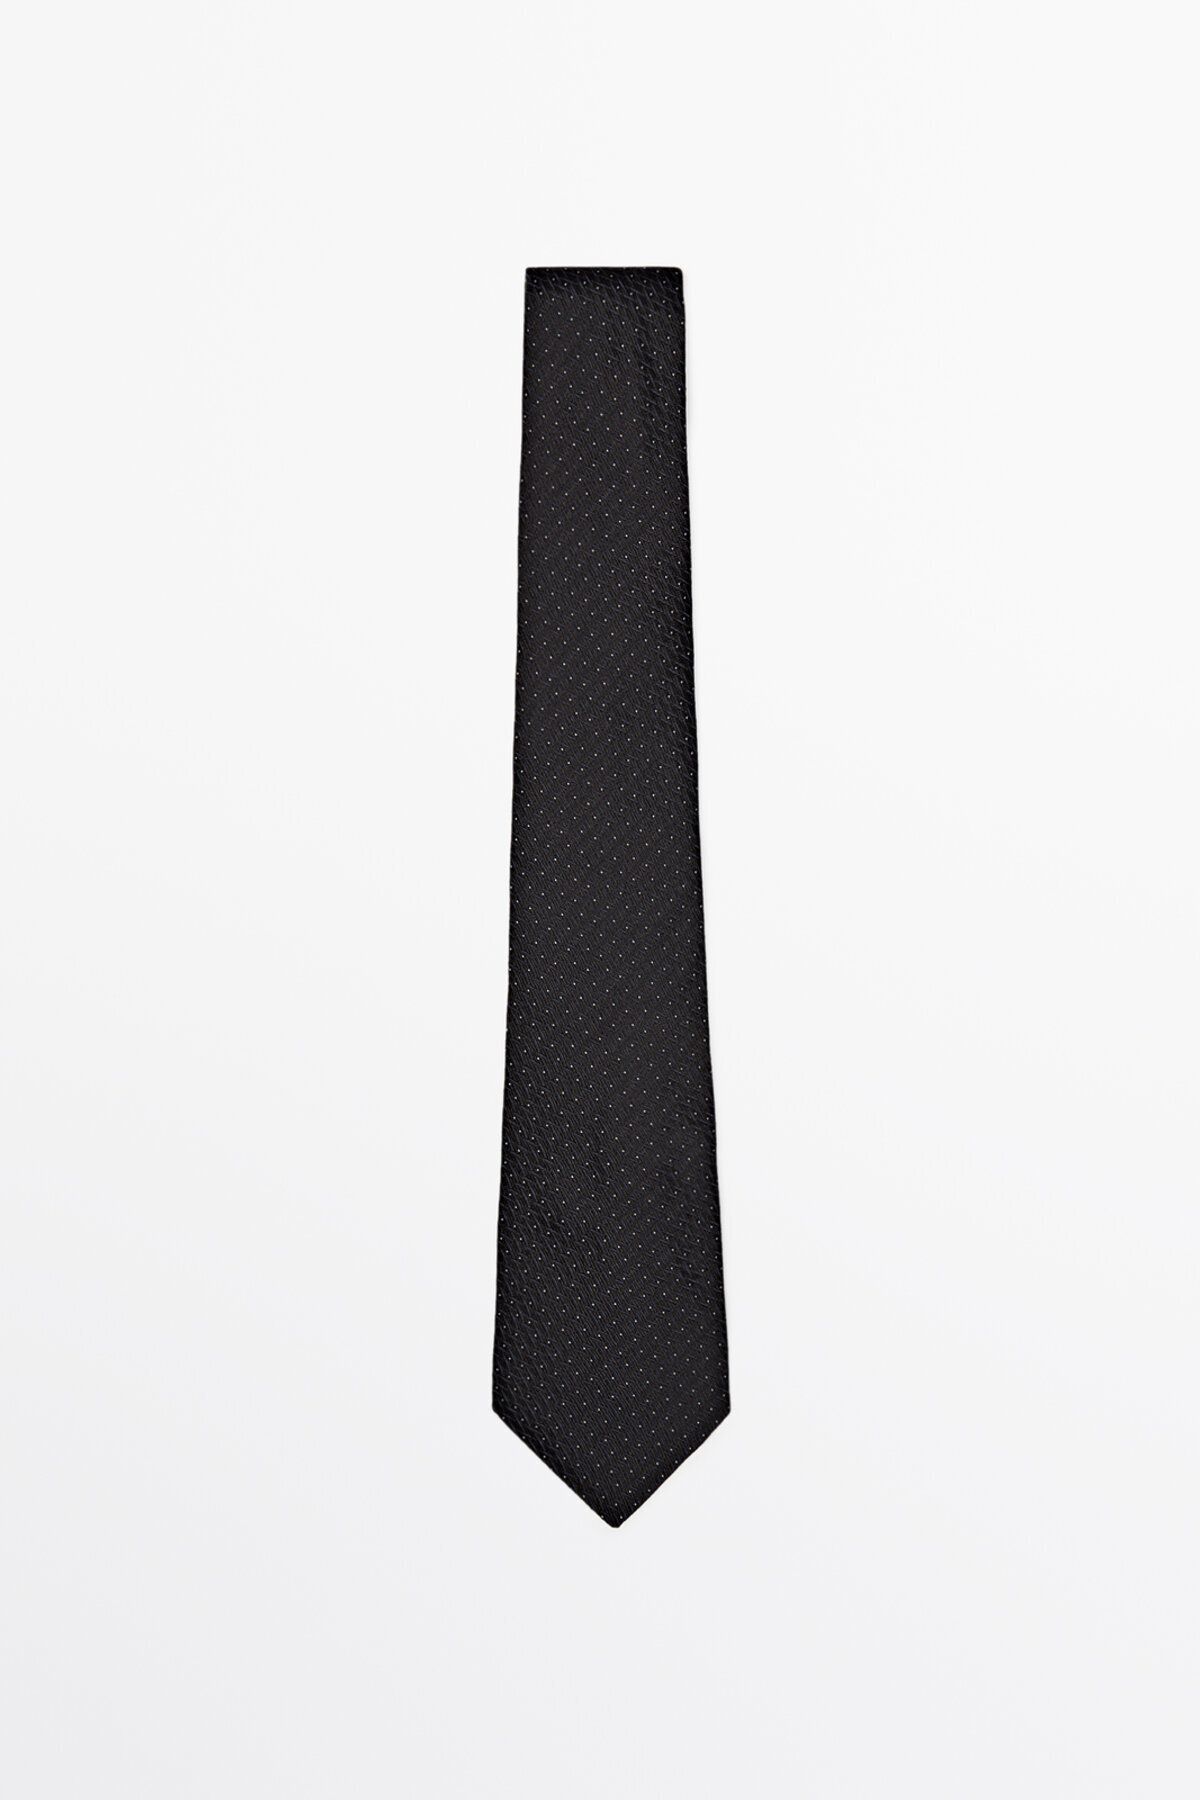 Massimo Dutti %100 ipek kravat